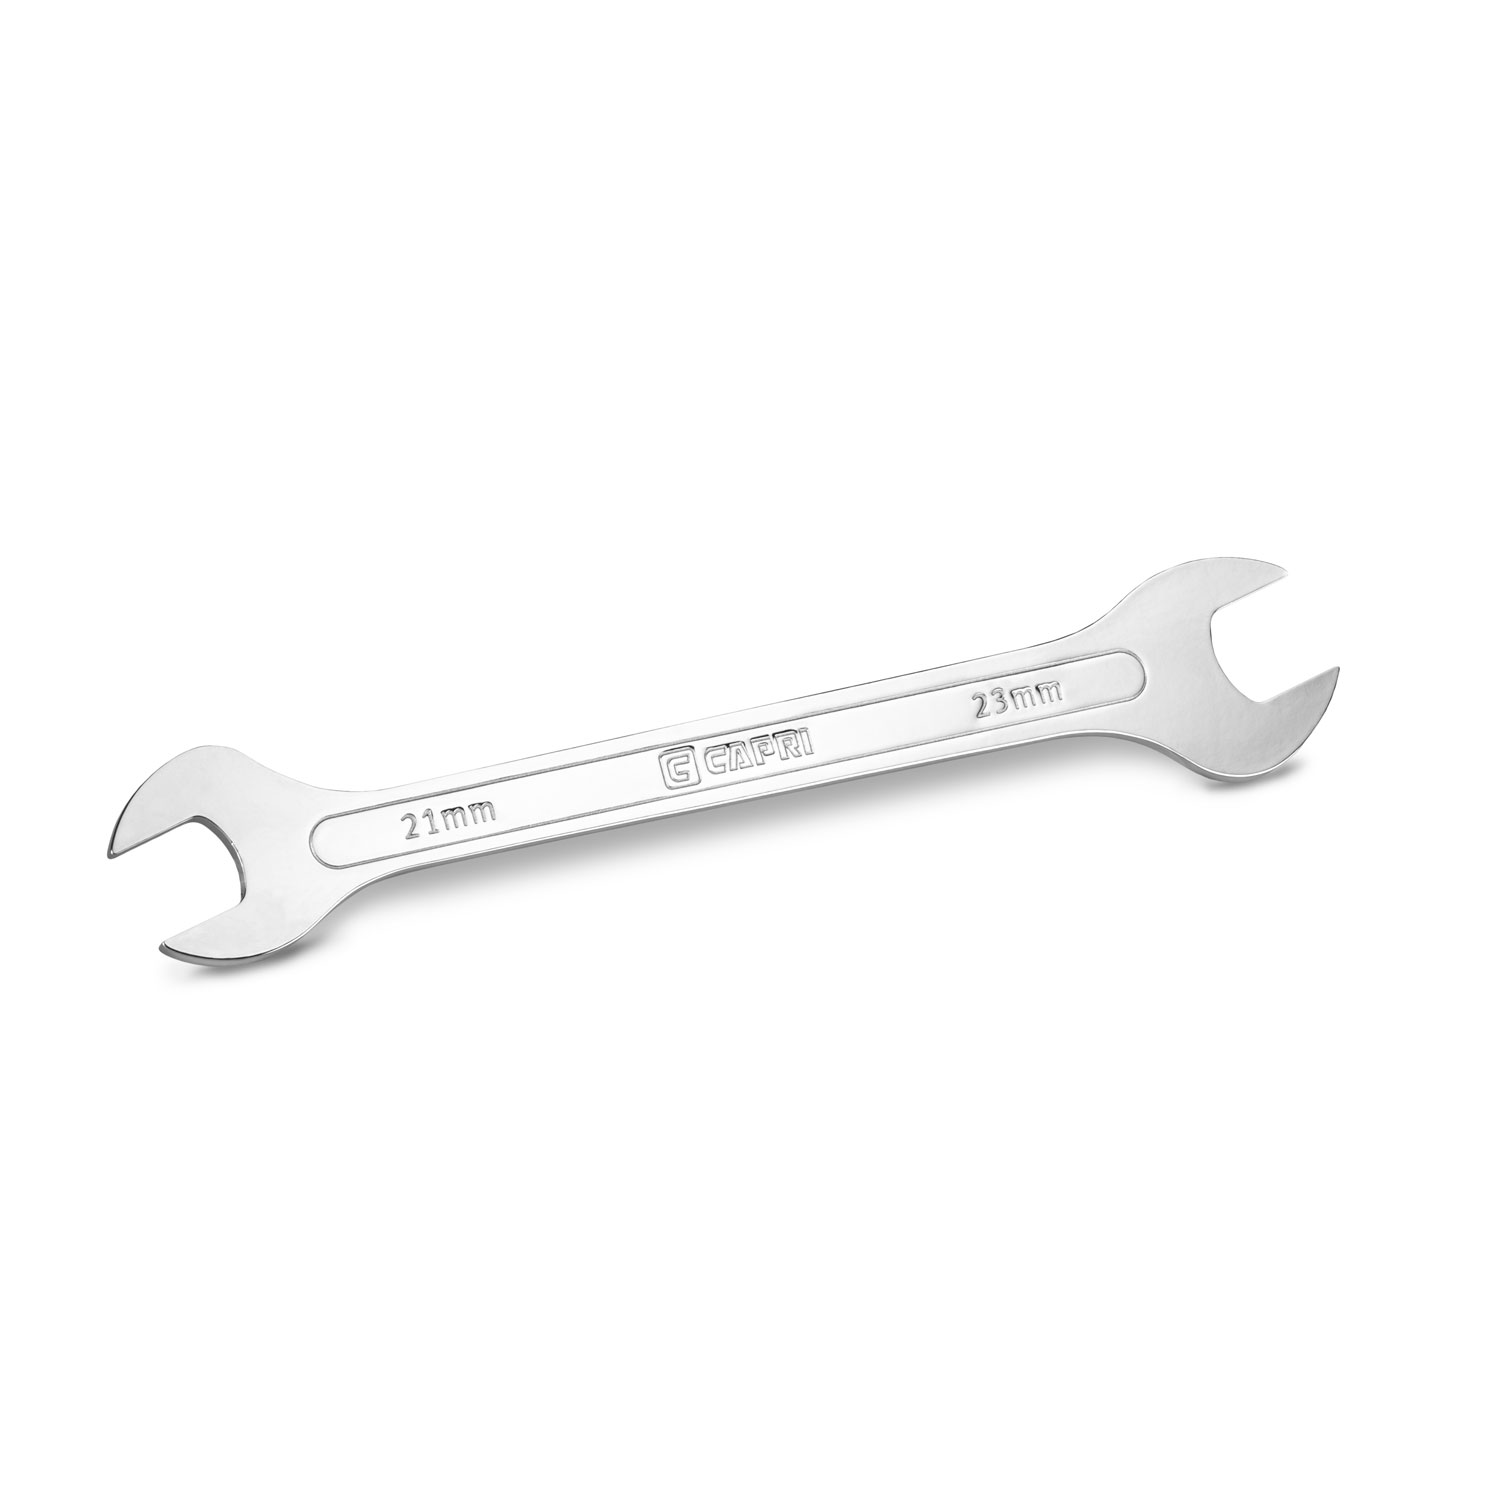 Capri Tools 21 mm x 23 mm Super-Thin Open End Wrench, Metric